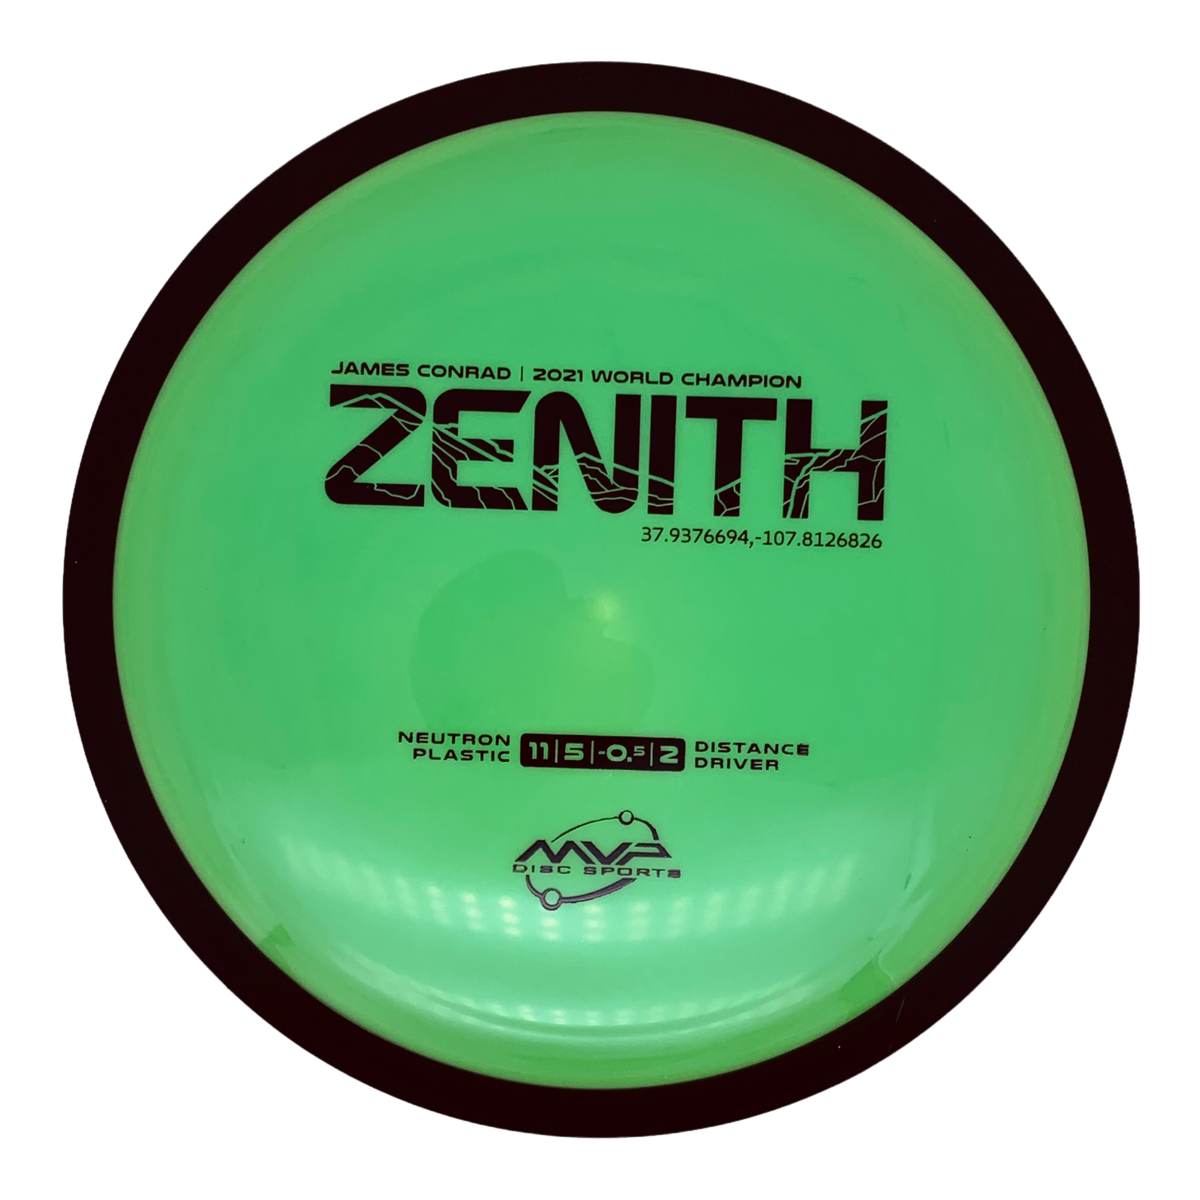 MVP Neutron Zenith - James Conrad 2022